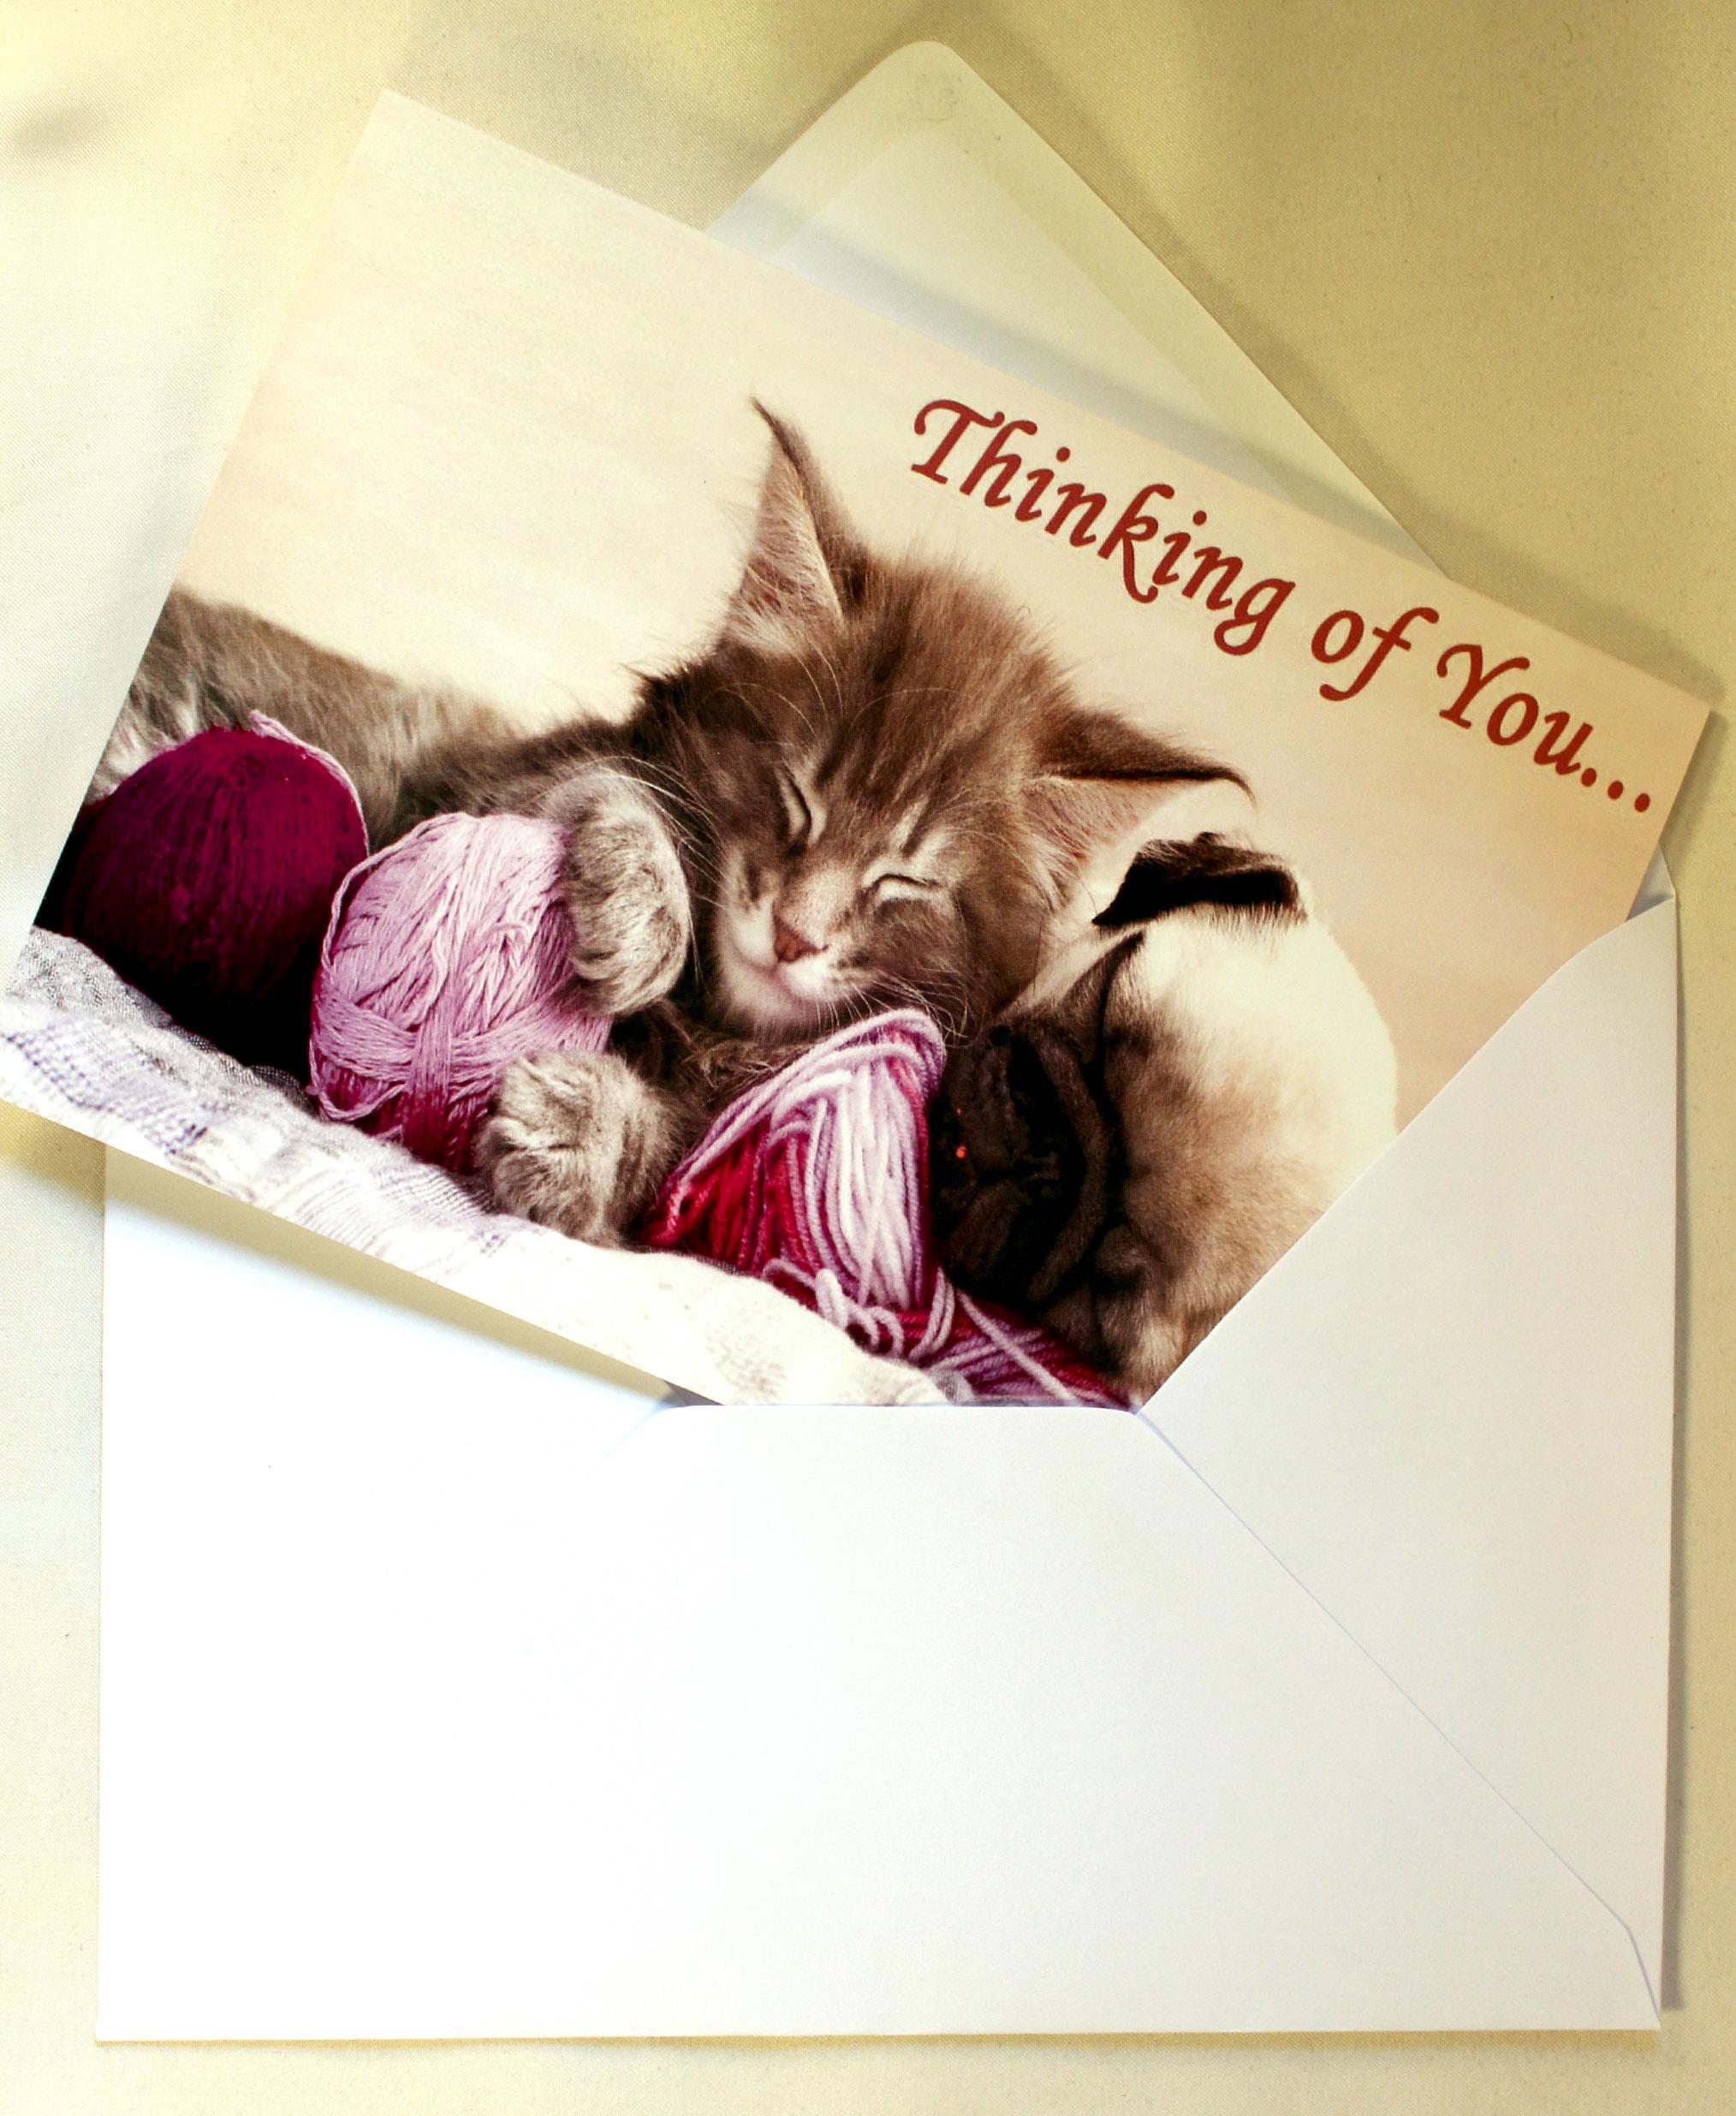 Cat and Dog Greeting Card in gummed envelope